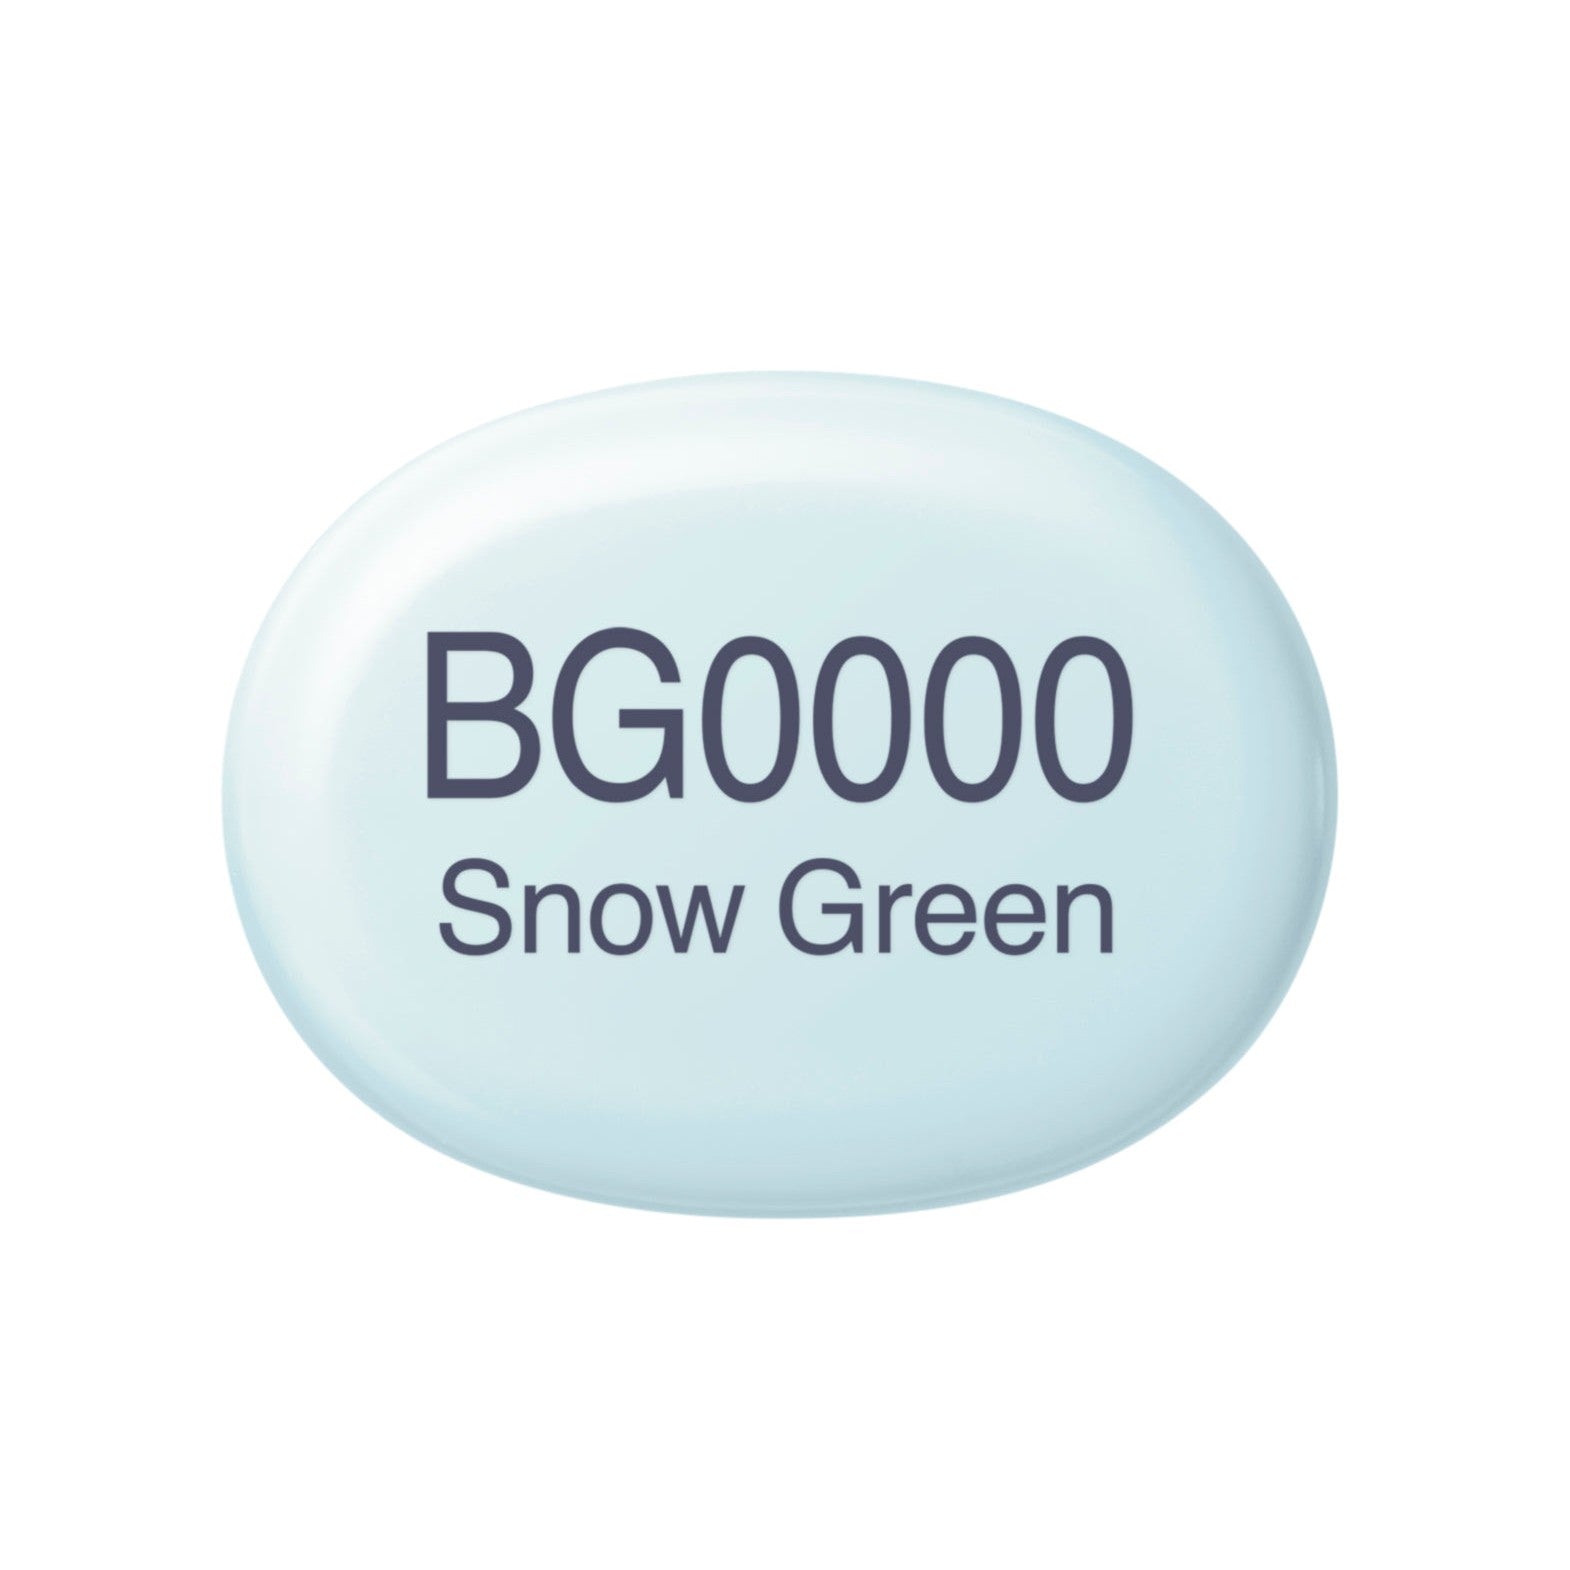 Copic - Sketch Marker - Snow Green - BG0000-ScrapbookPal